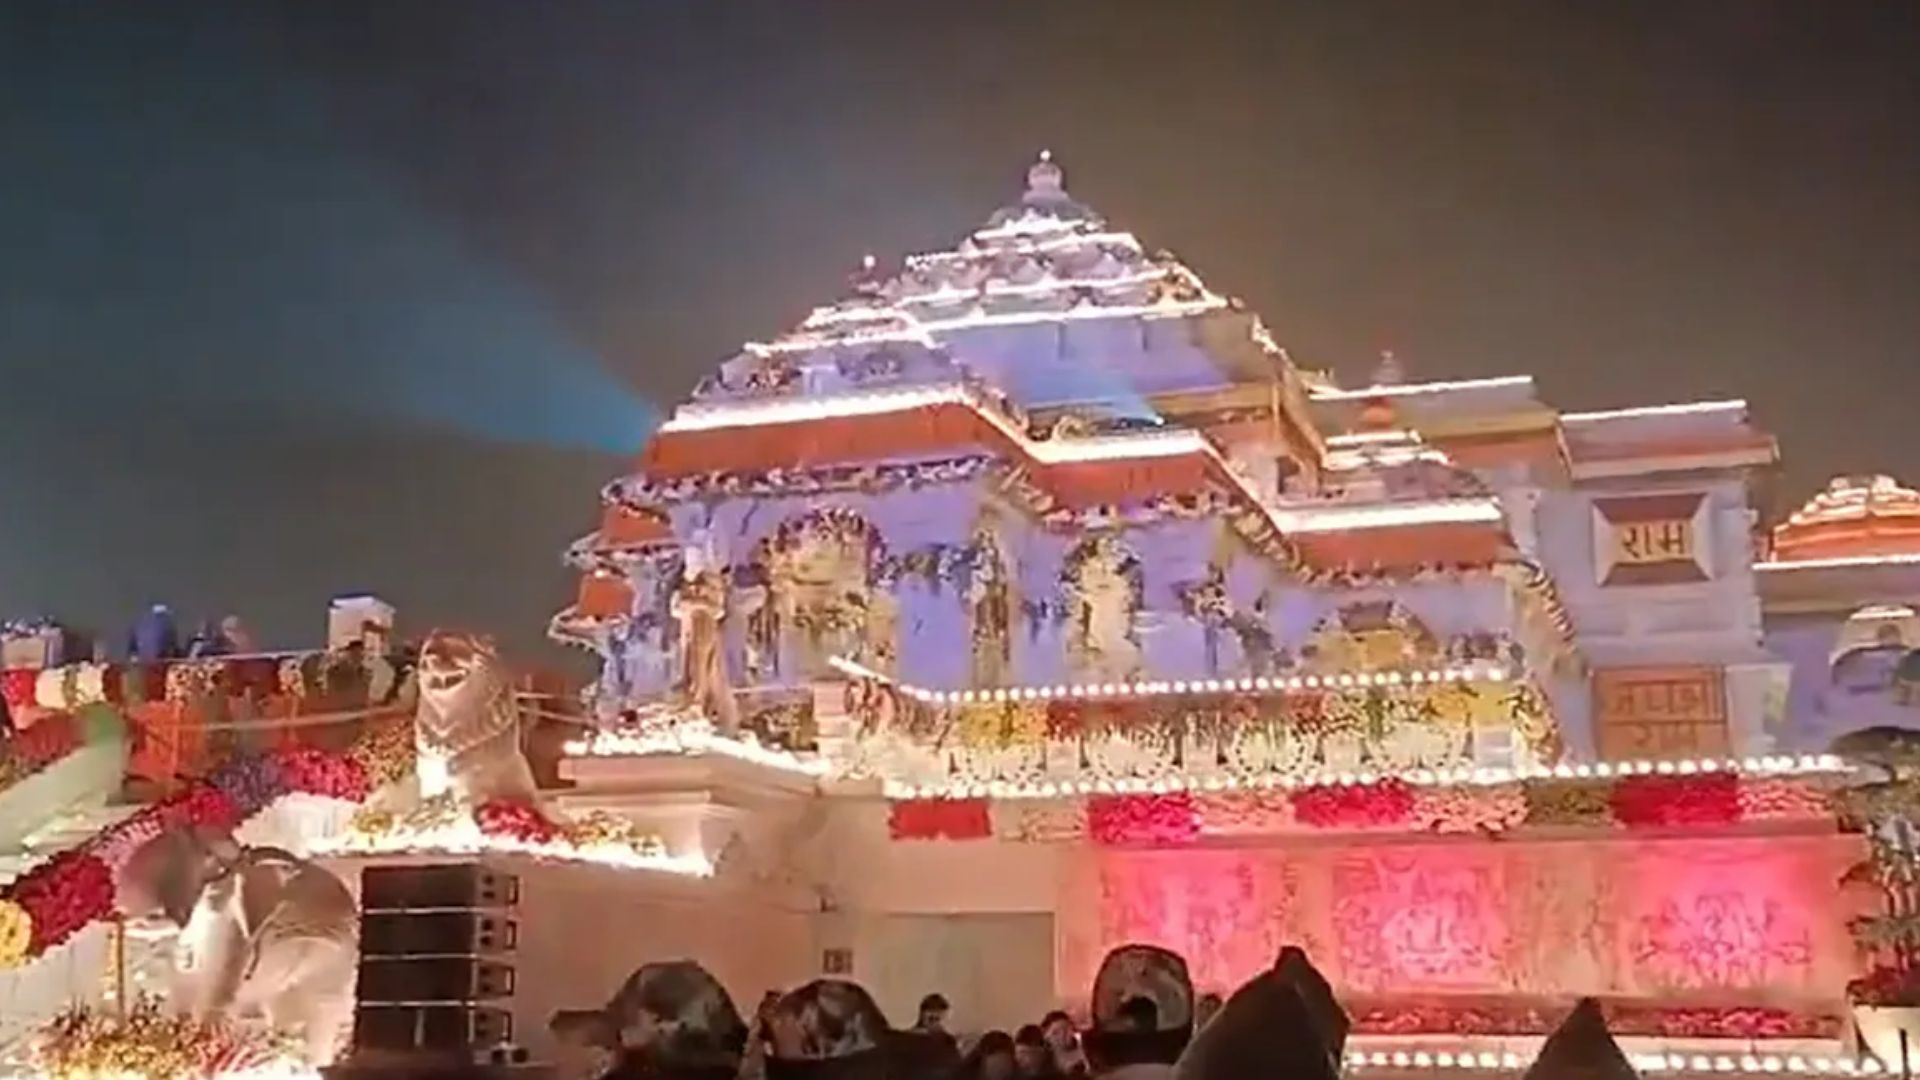 Ram Temple illuminated, beautifully decorated ahead of ‘Pran Pratishtha’ ceremony